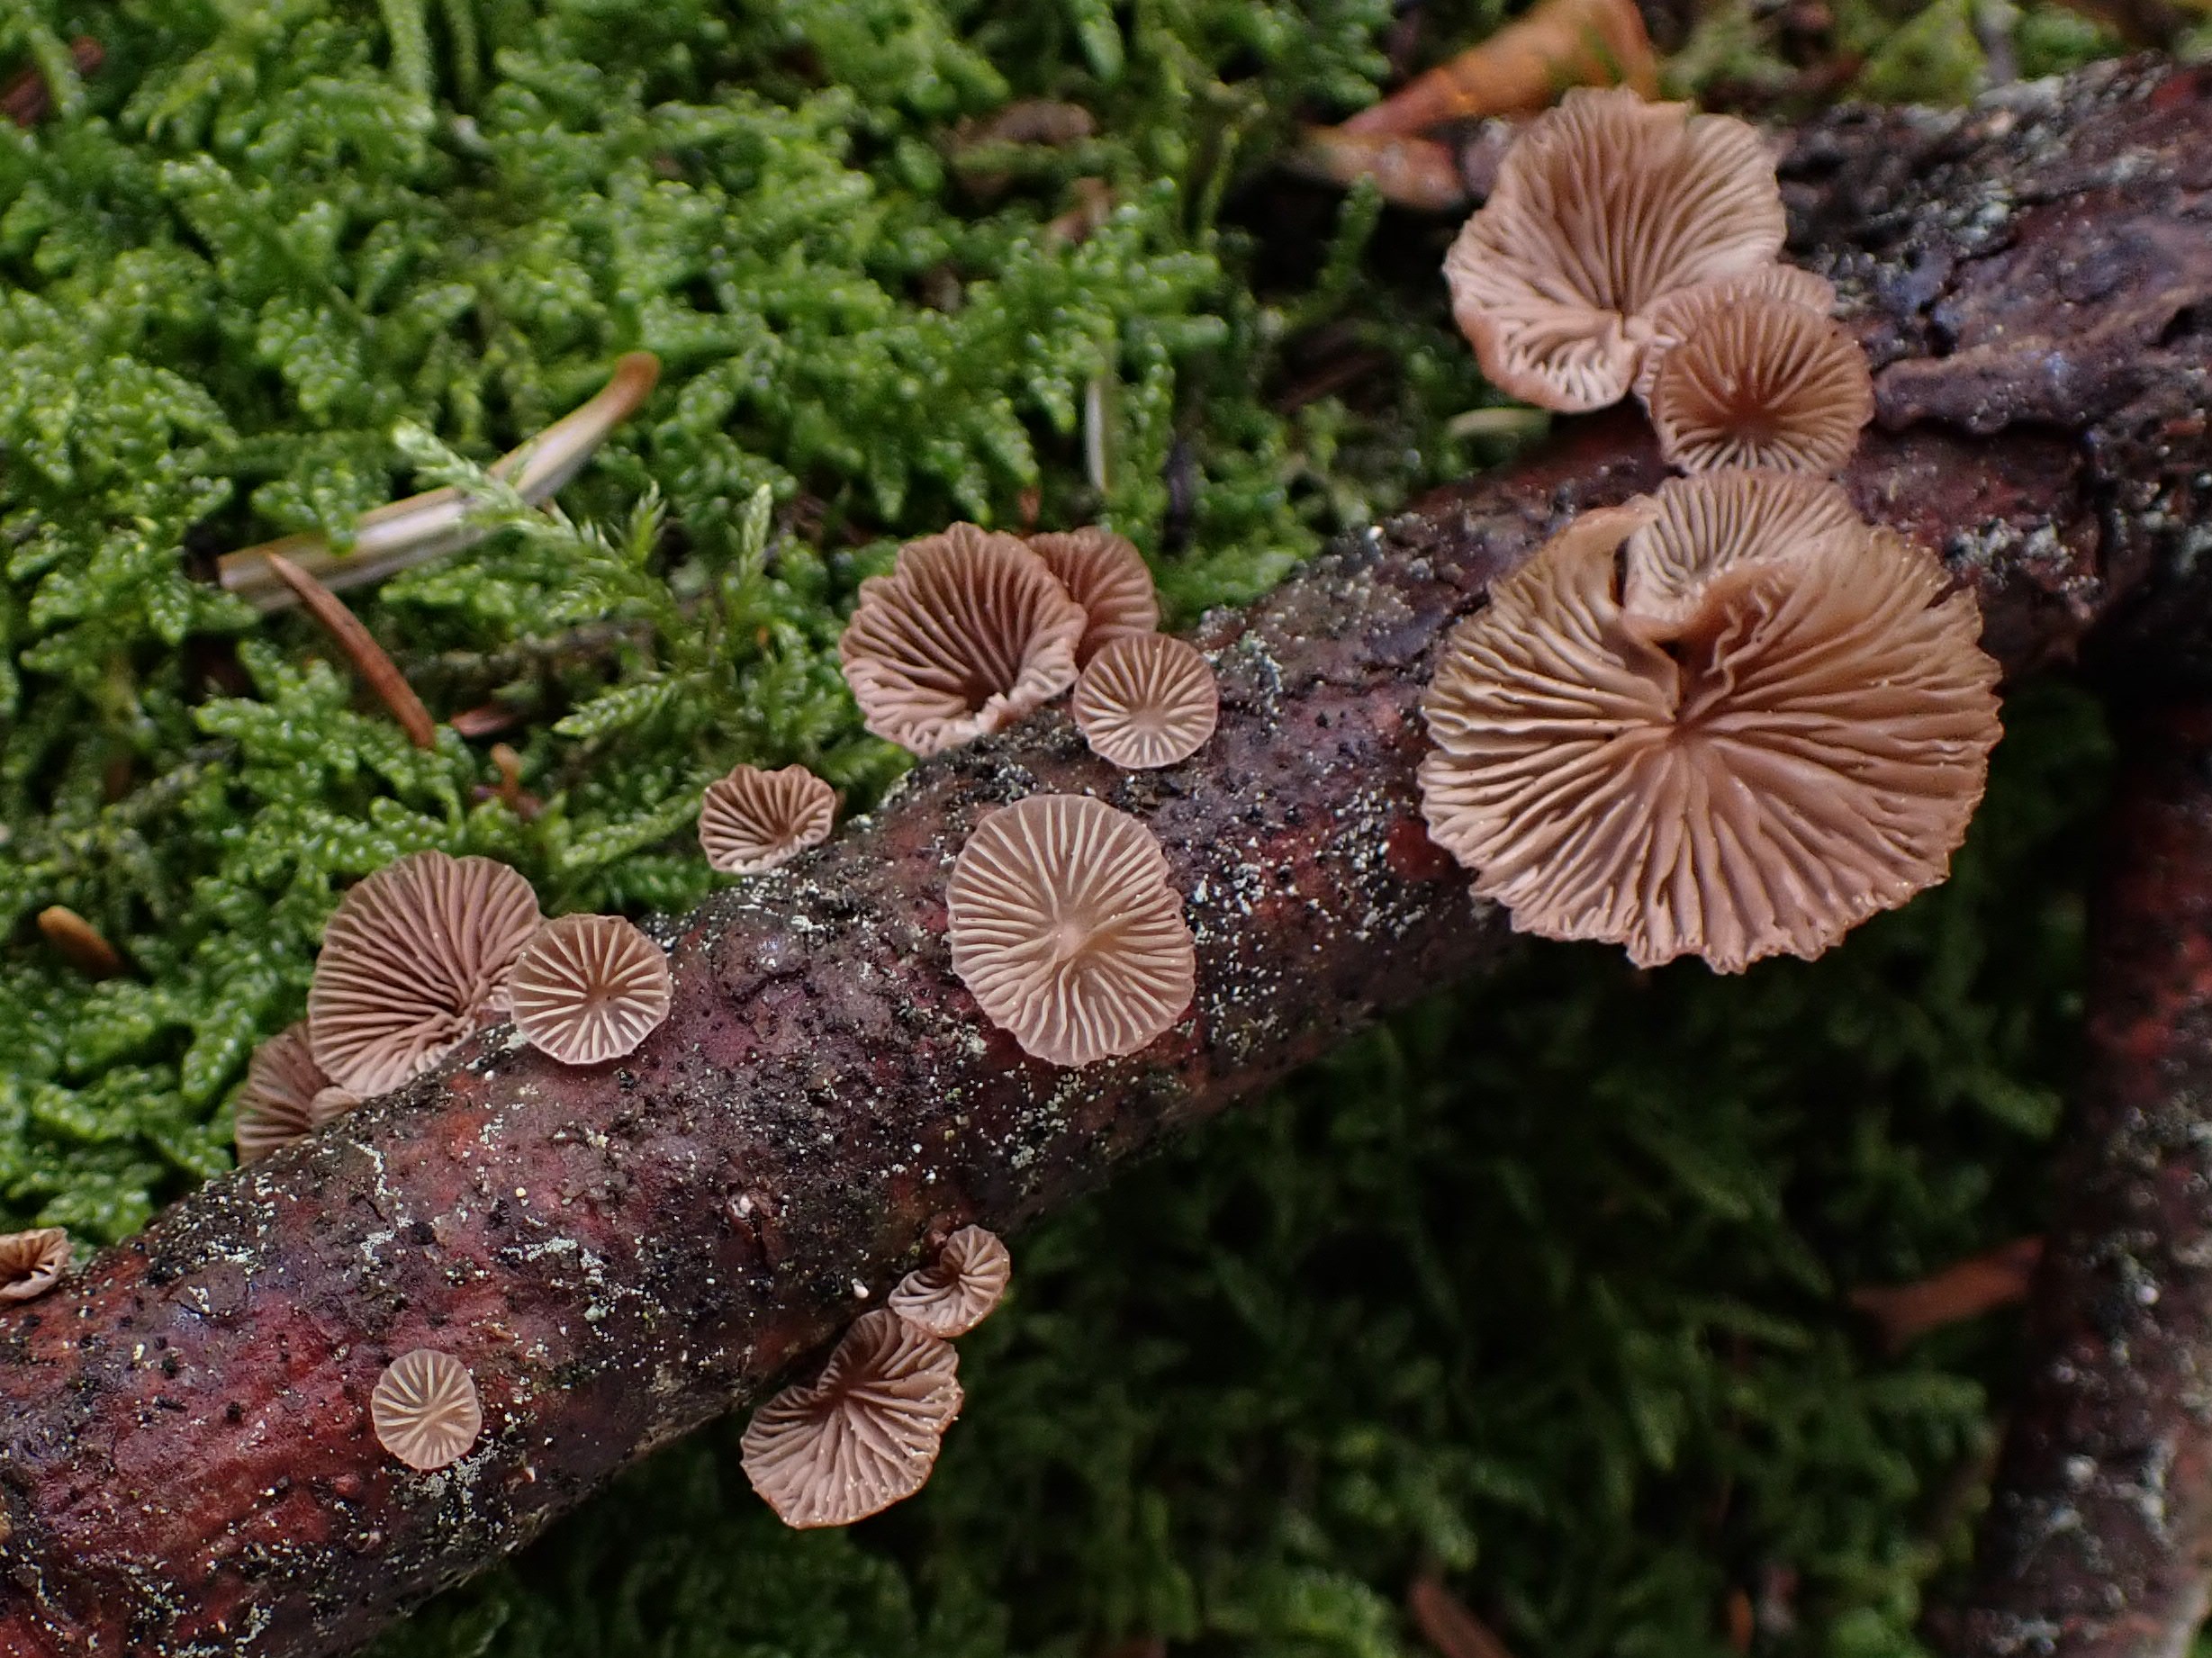 B9) Wood-inhabiting fungi